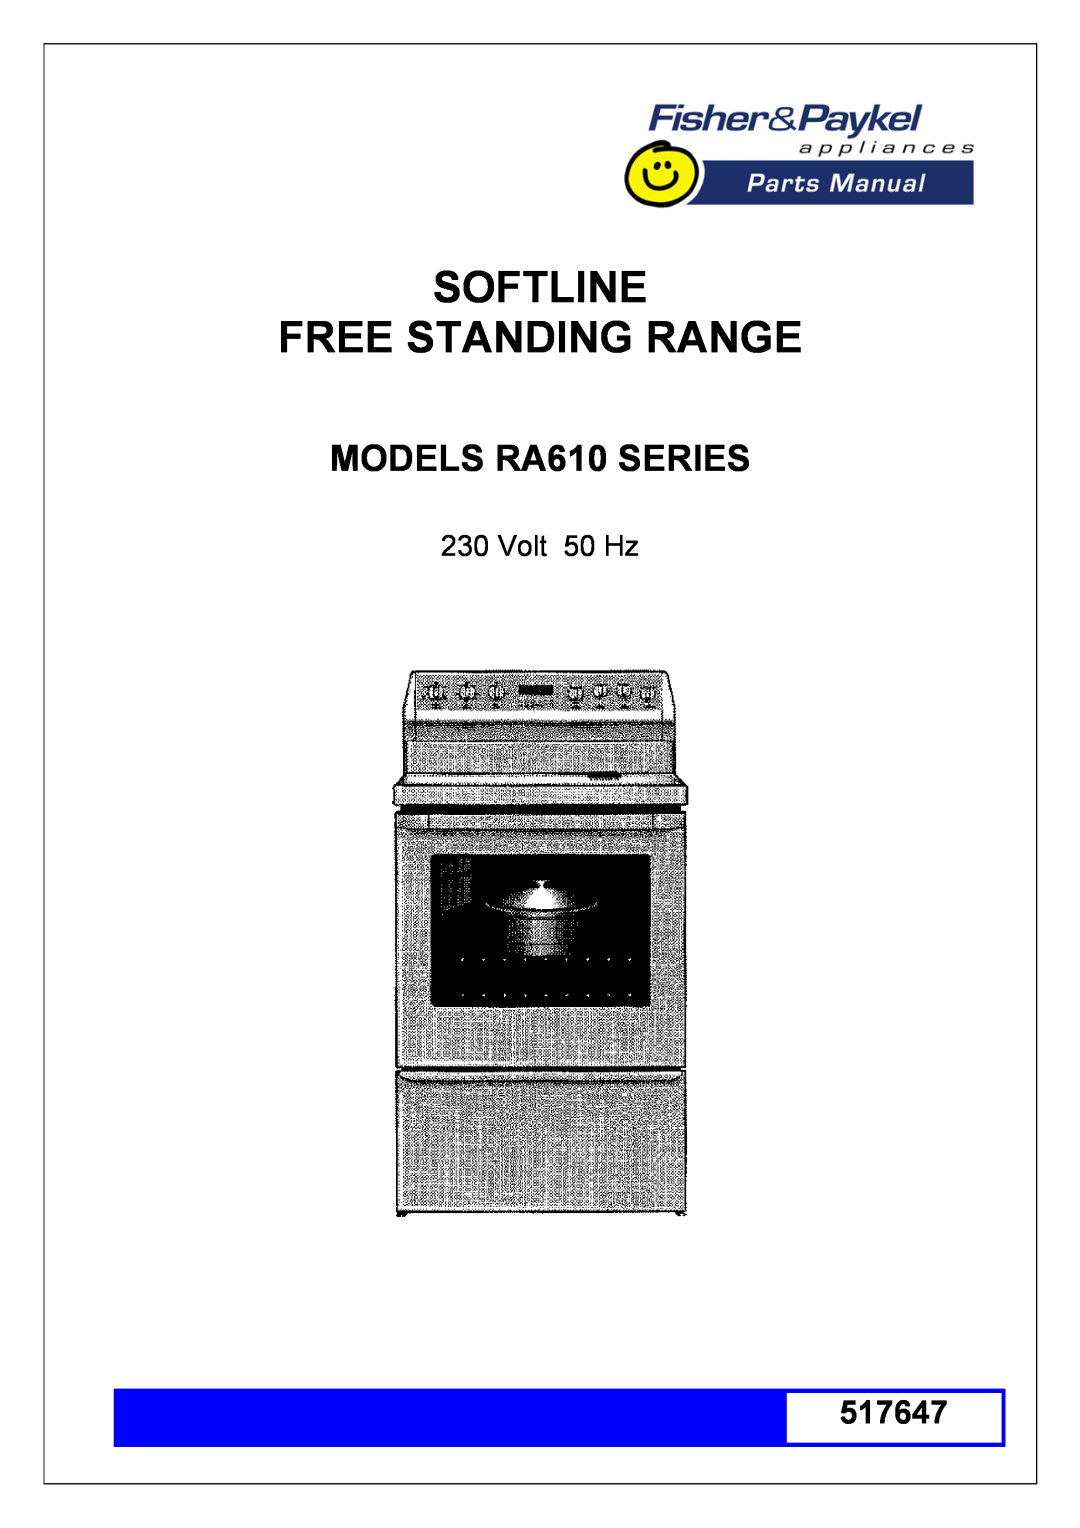 Fisher & Paykel manual Softline Free Standing Range, MODELS RA610 SERIES, 517647, Volt 50 Hz 